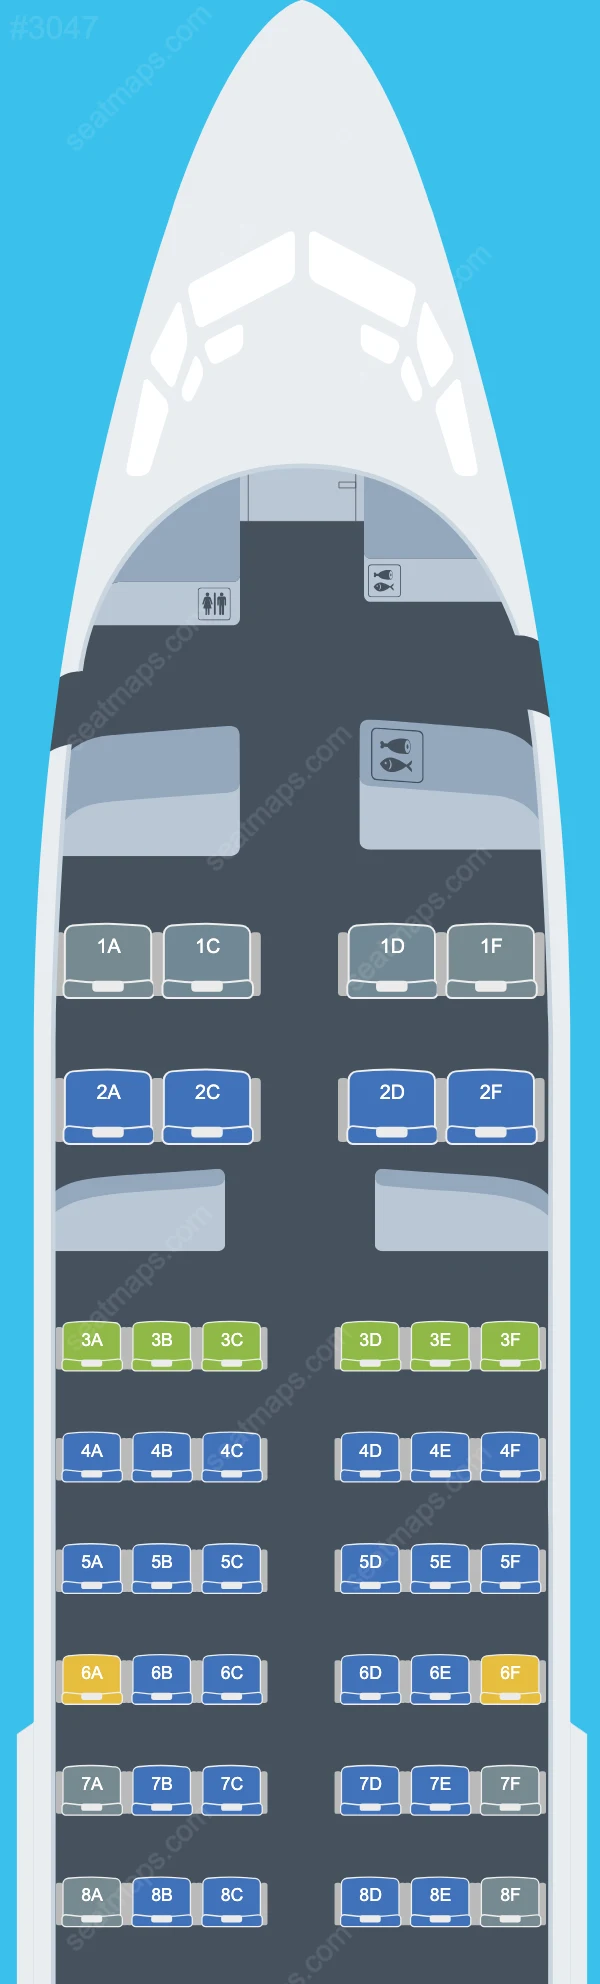 Aerolineas Argentinas Boeing 737 Plan de Salle 737-700